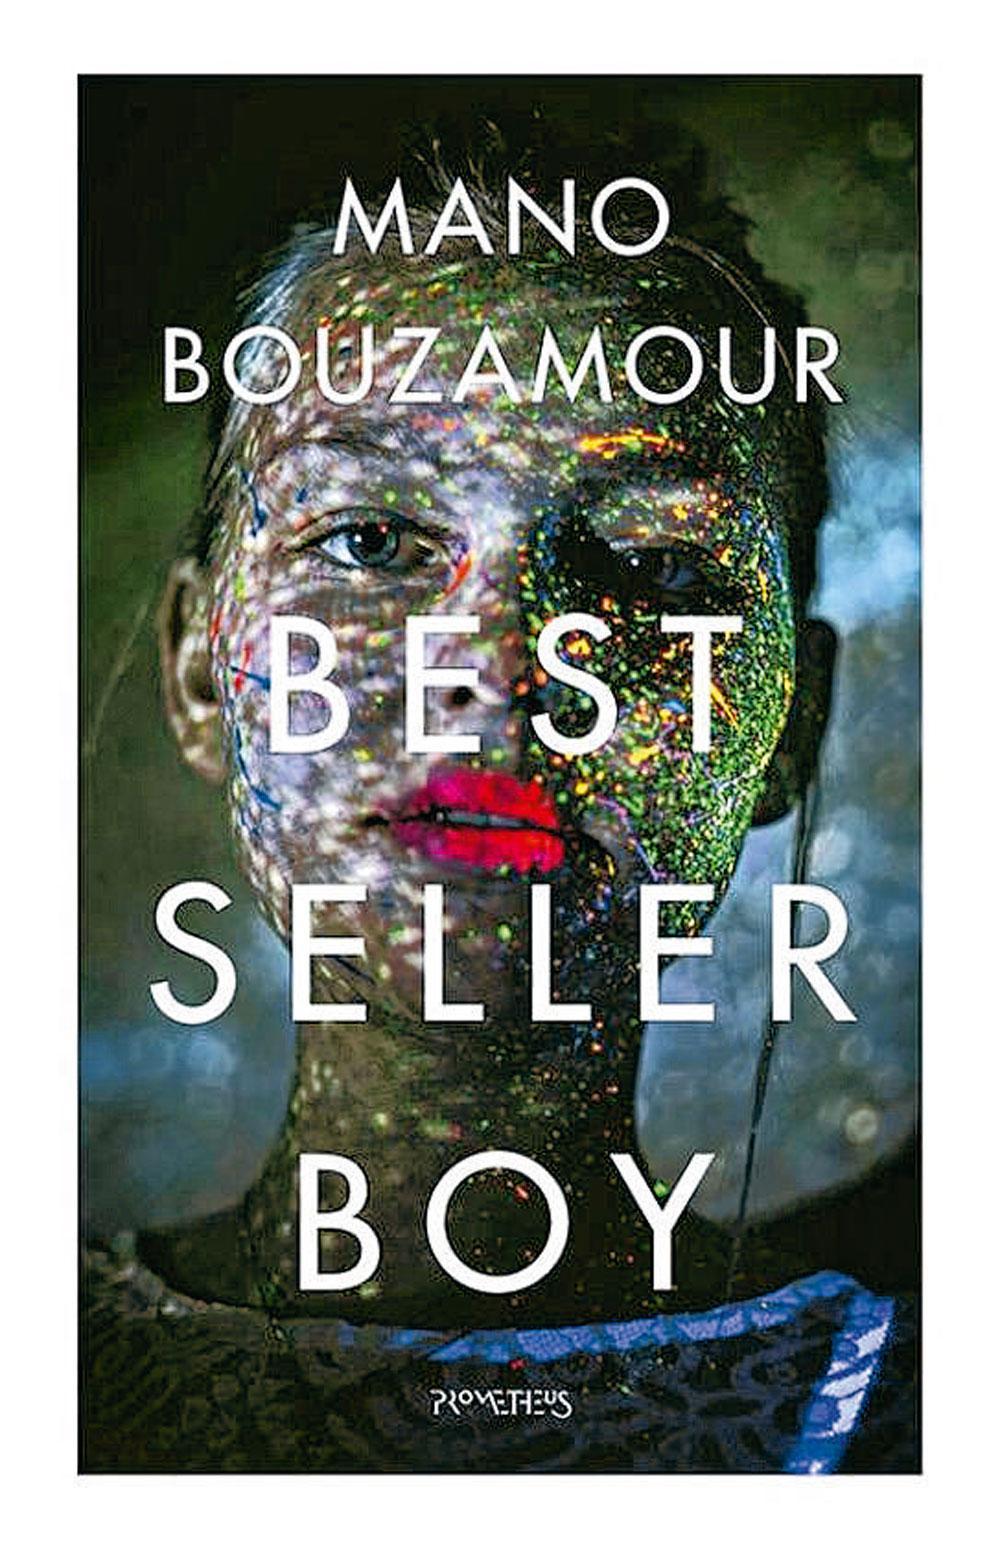 Mano Bouzamour, Bestsellerboy, uitg. Prometheus, 304 blz., 19,99 euro